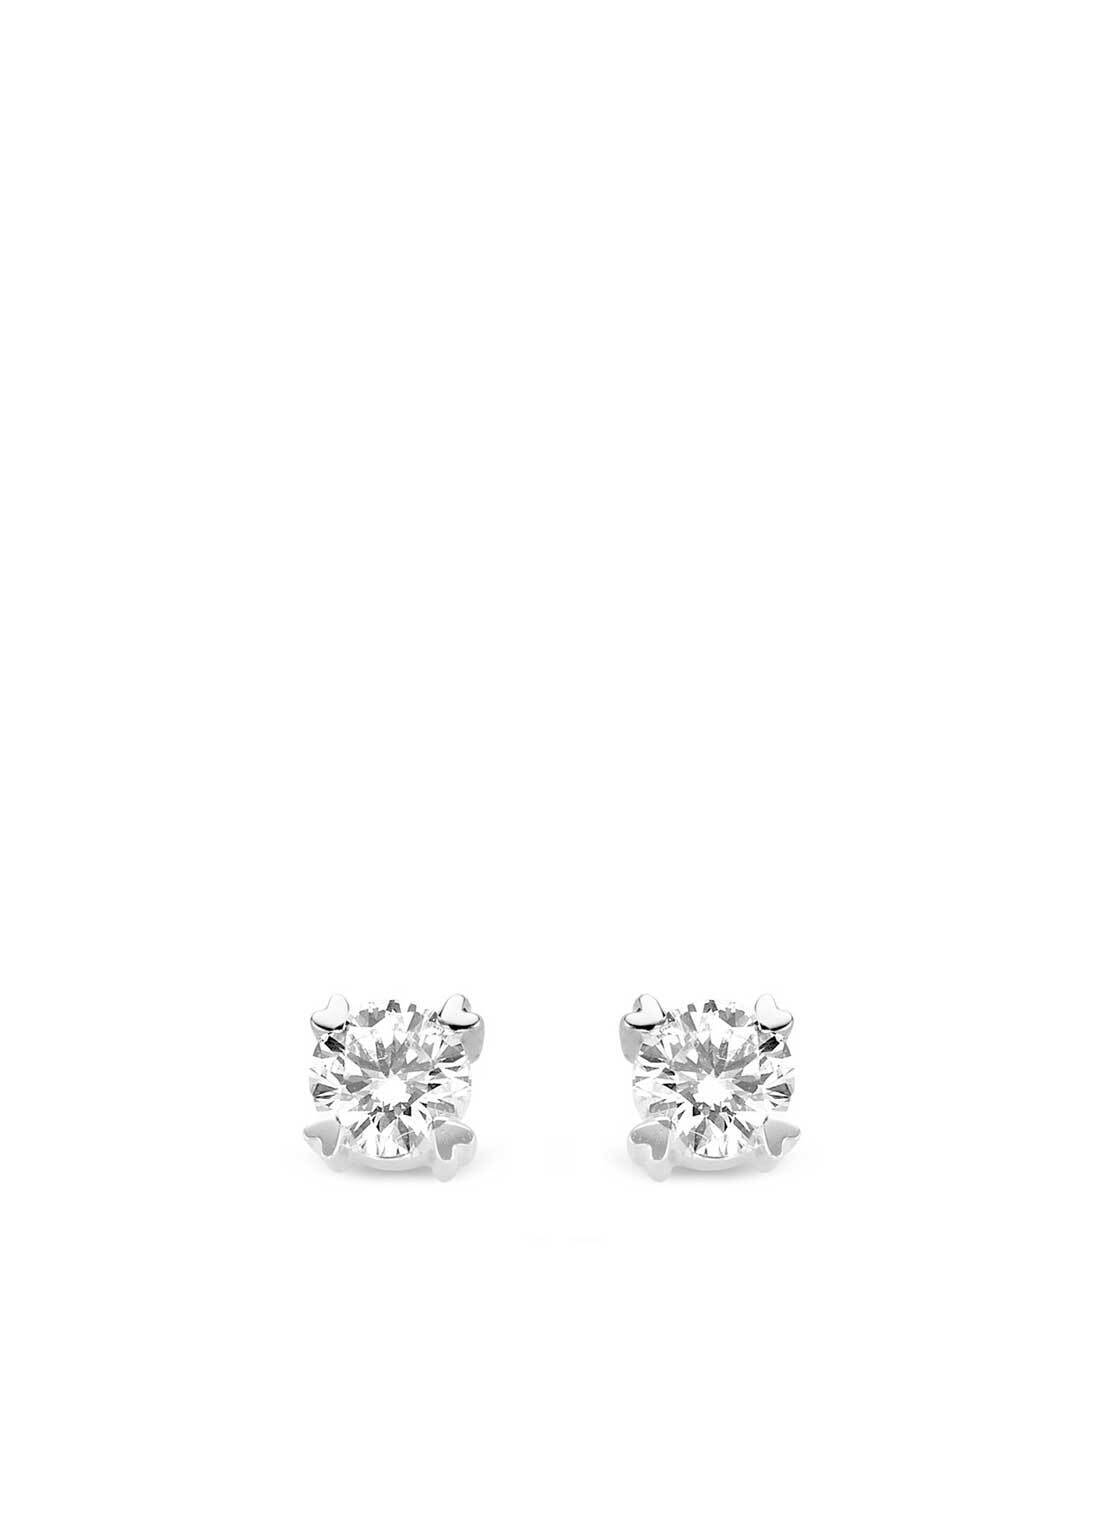 White gold ear jewelry, 0.28 CT Diamond, Hearts & Arrows